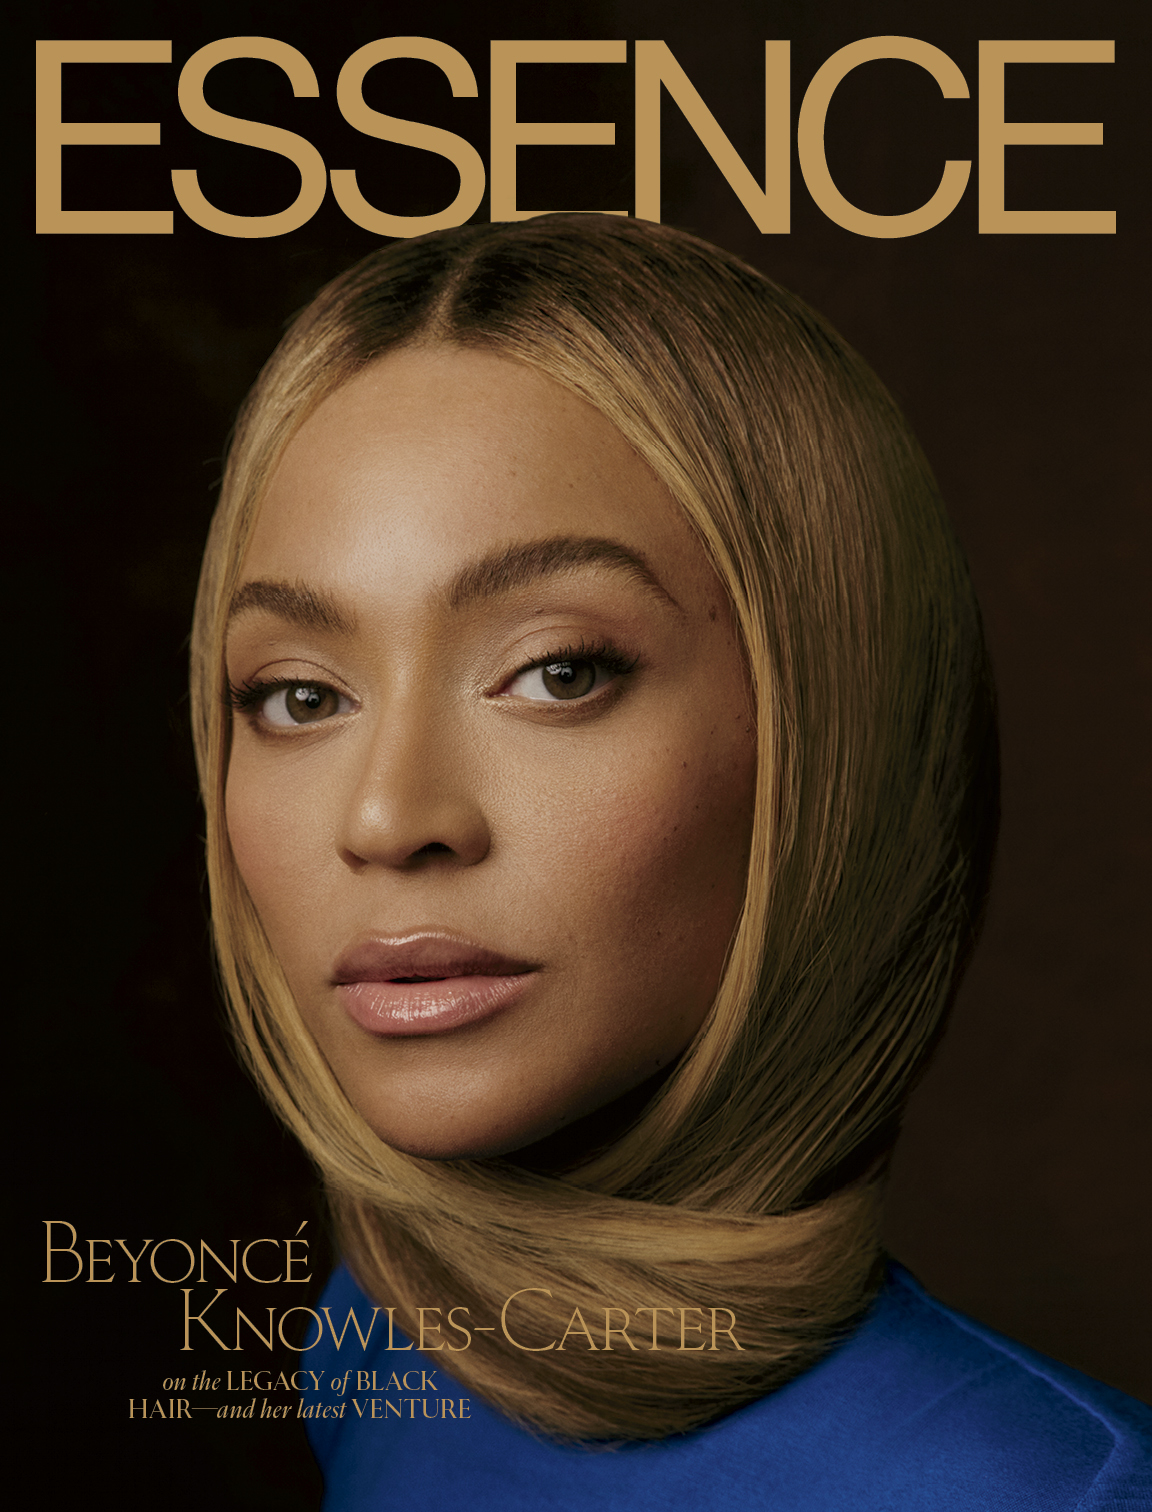 Beyonce x Essence